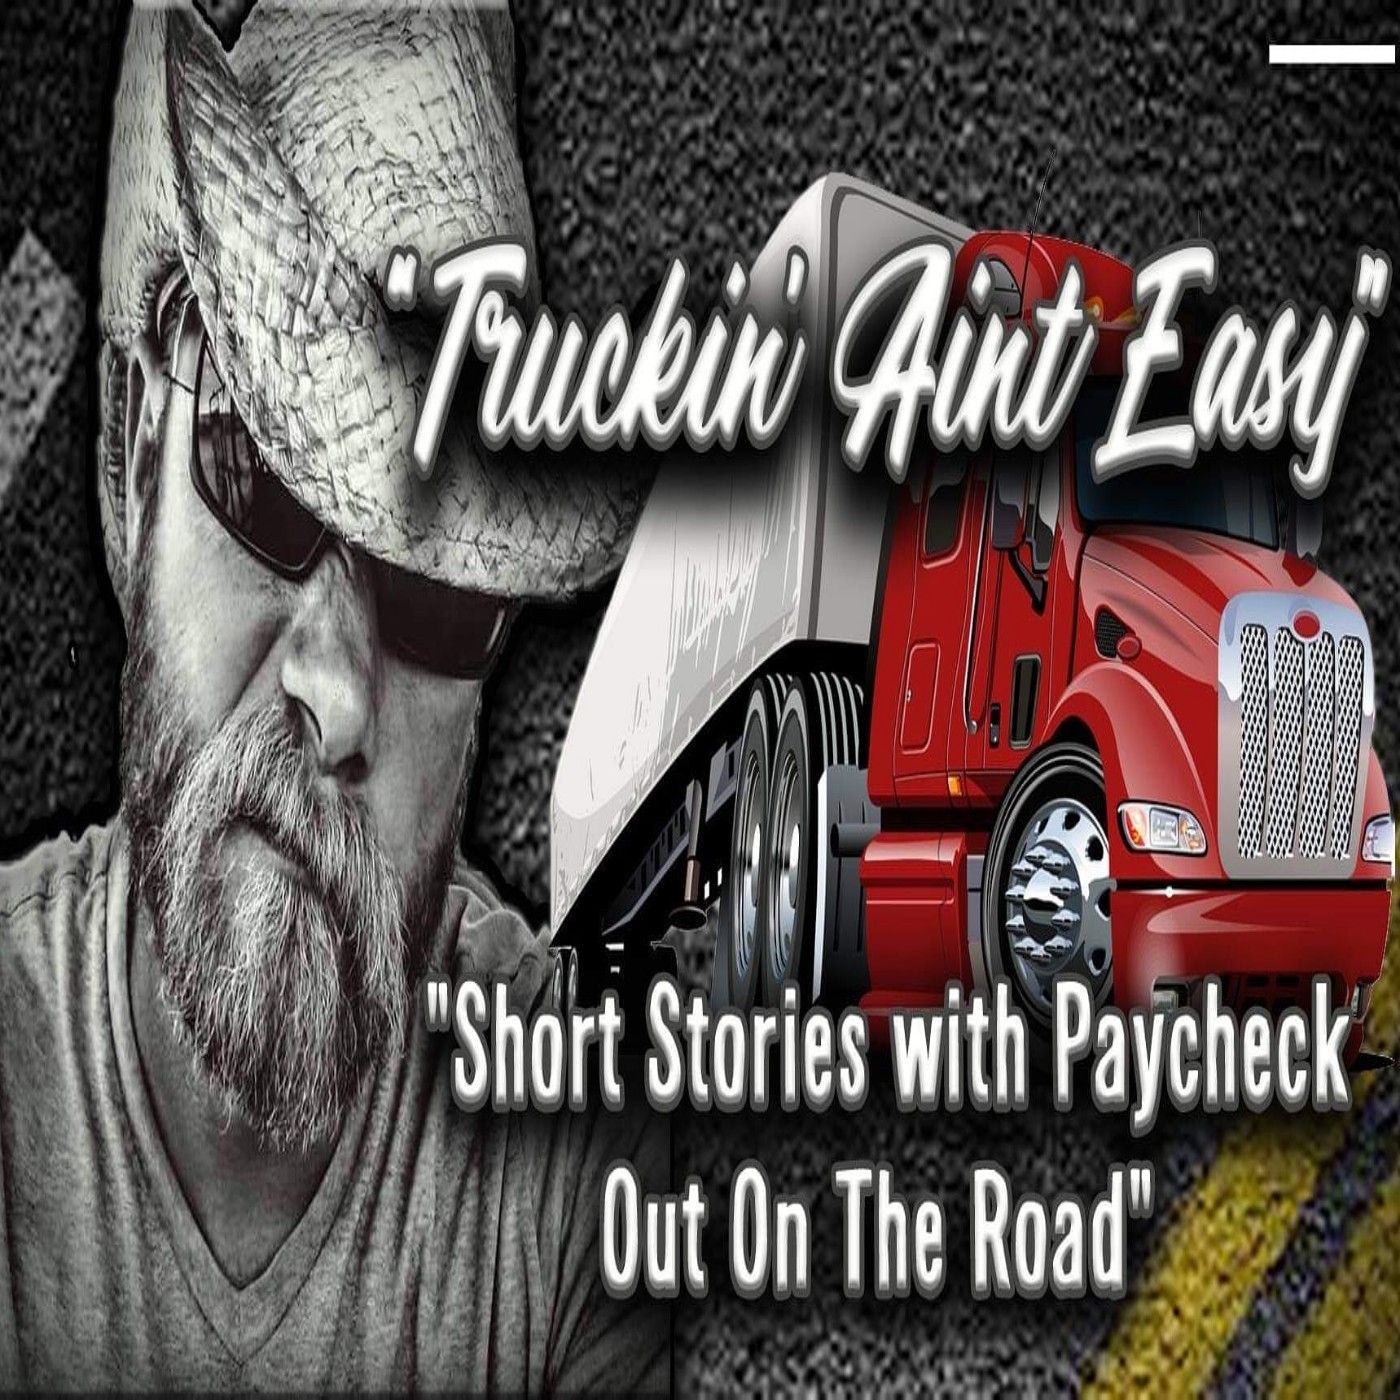 Truckin' Ain't Easy, Vol.5- "Held Hostage"